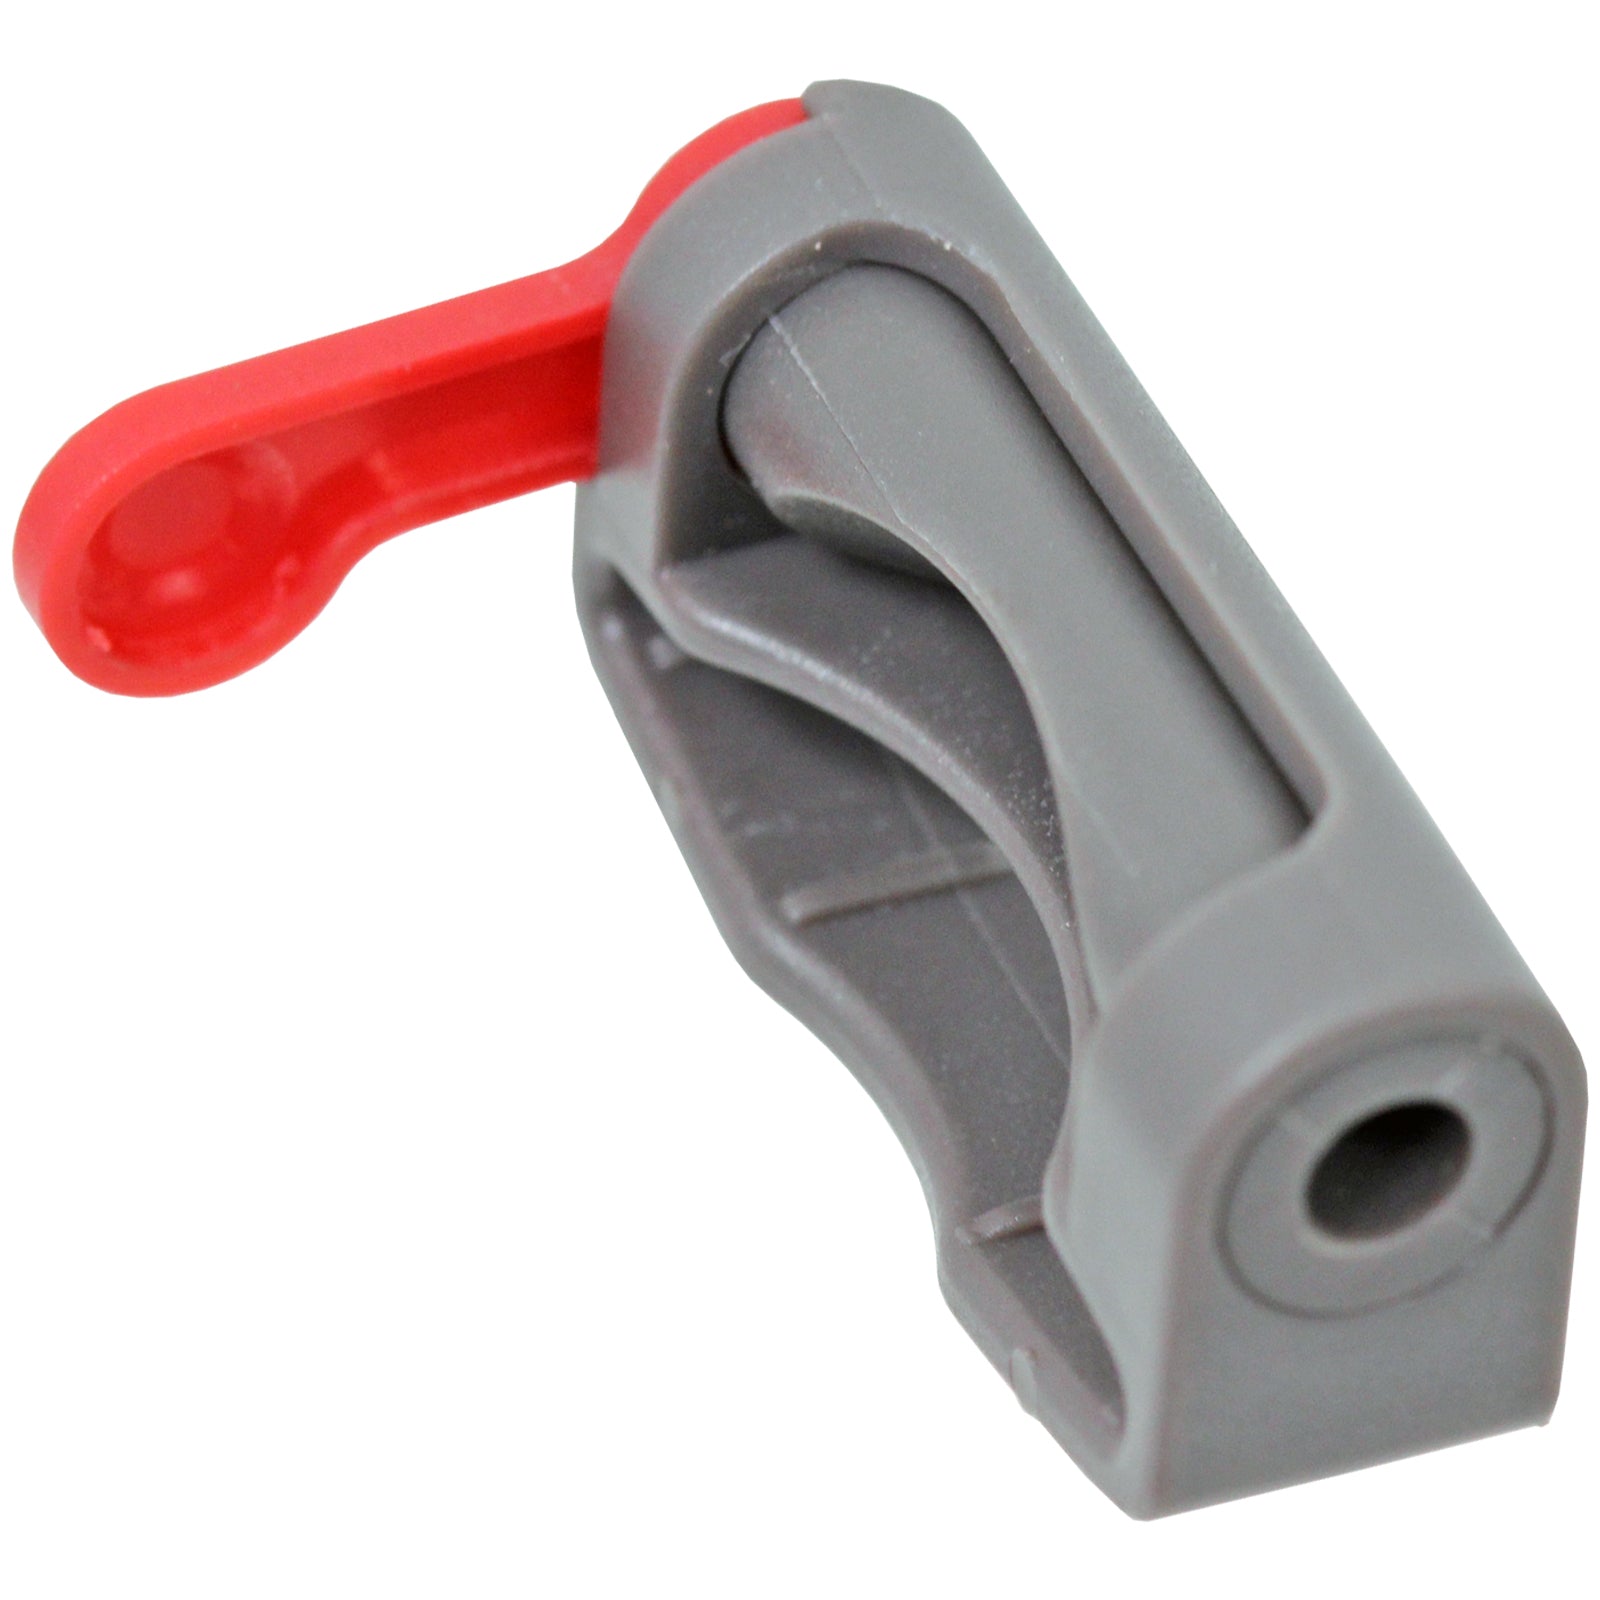 Washable Pre-Motor Stick Filter + Trigger Lock for Dyson V8 Vacuum Cleaner